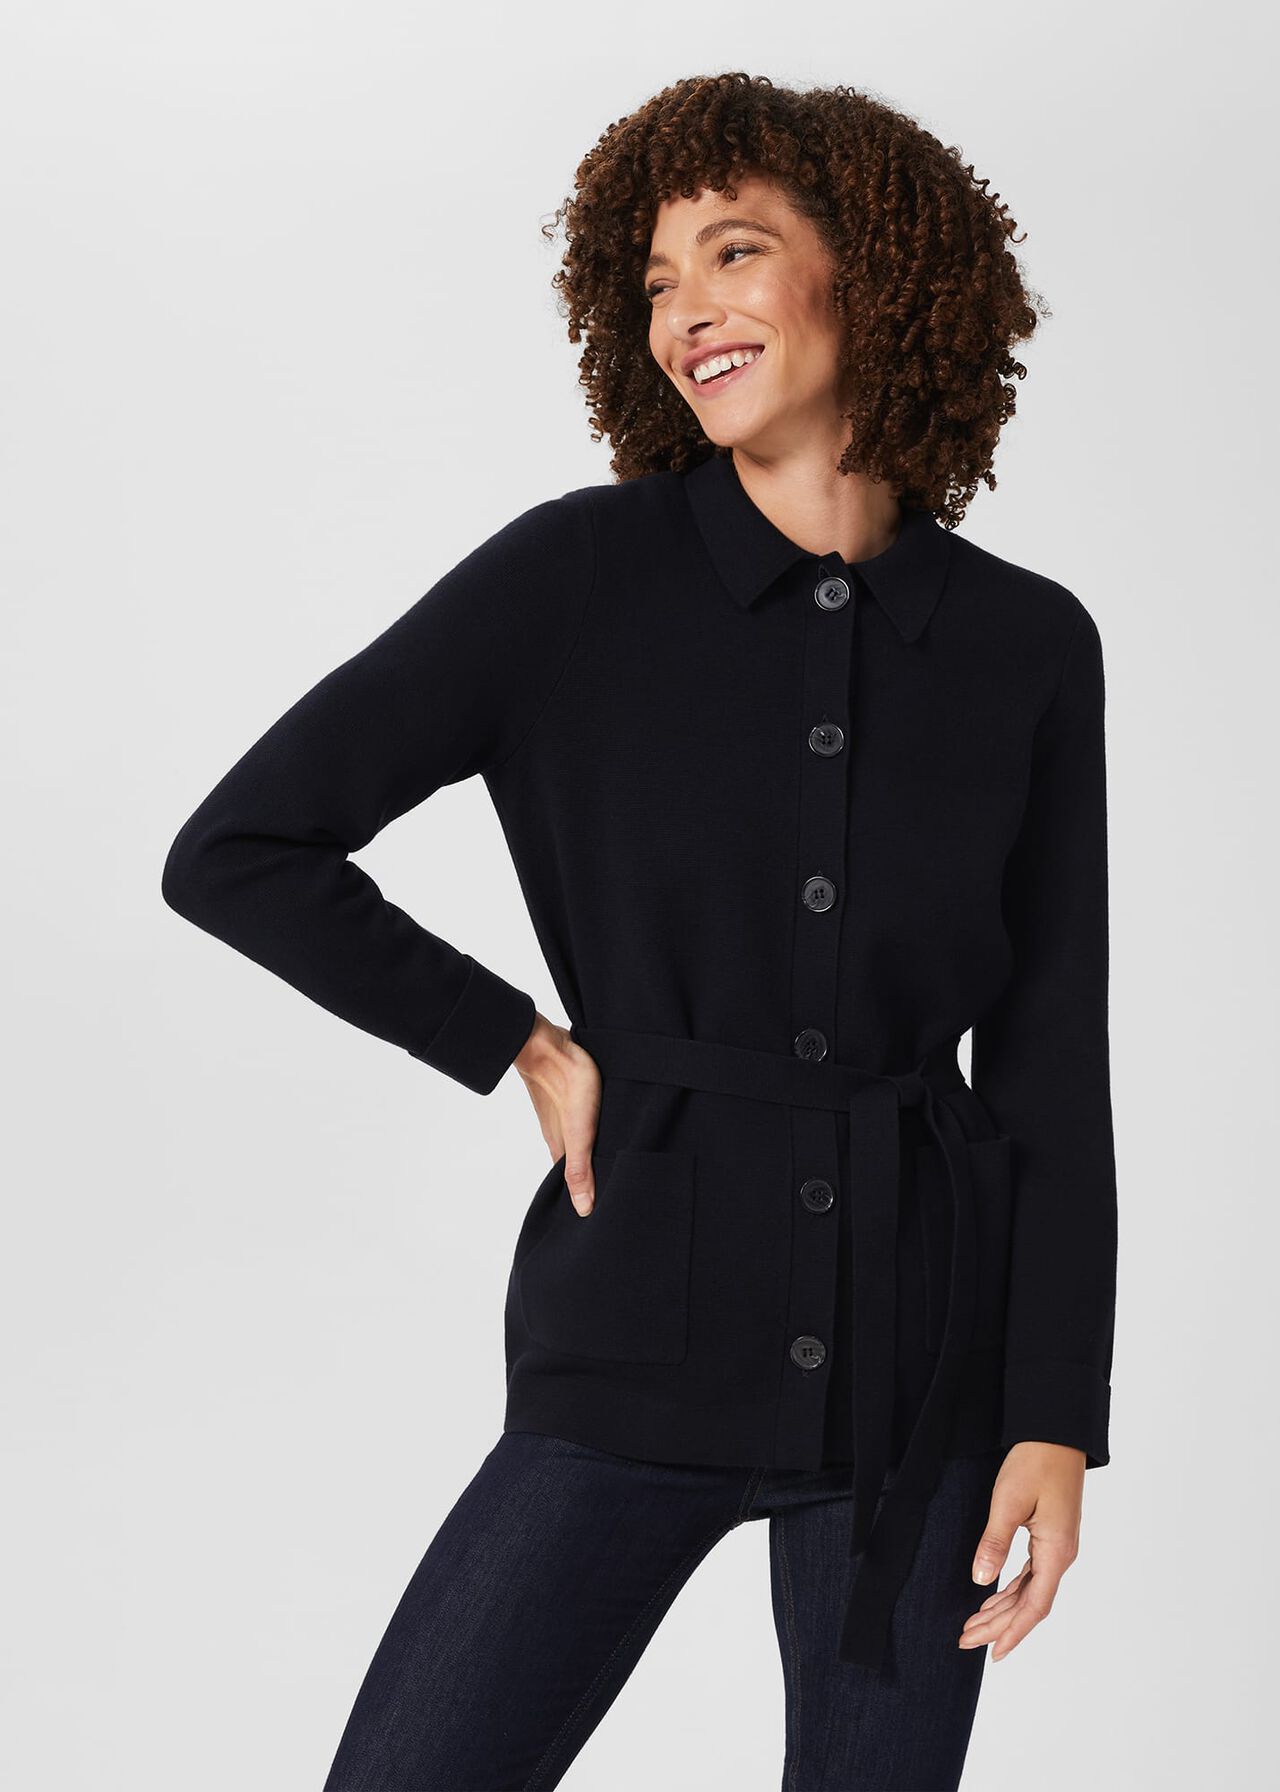 Paloma Cotton Wool Knitted Jacket, Navy, hi-res